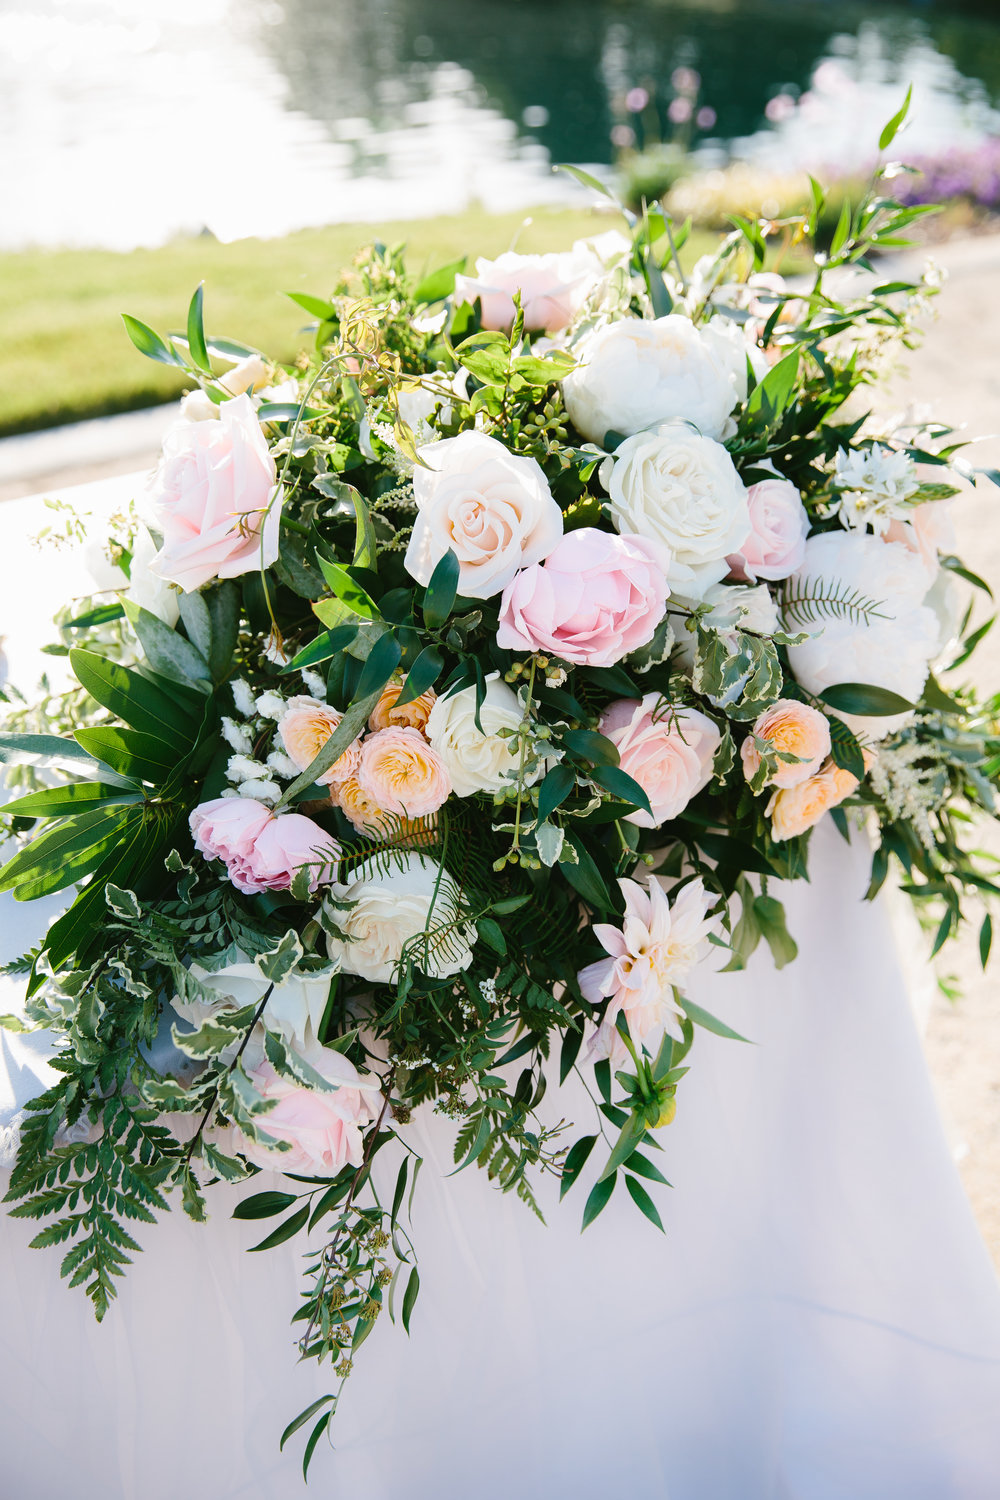 Violette-fleurs-event-design-roseville-anna-perevertaylo-rancho-robles-vinyards-California-Classic-Bride-groom-upscale-florist-sweetheart-table.jpg